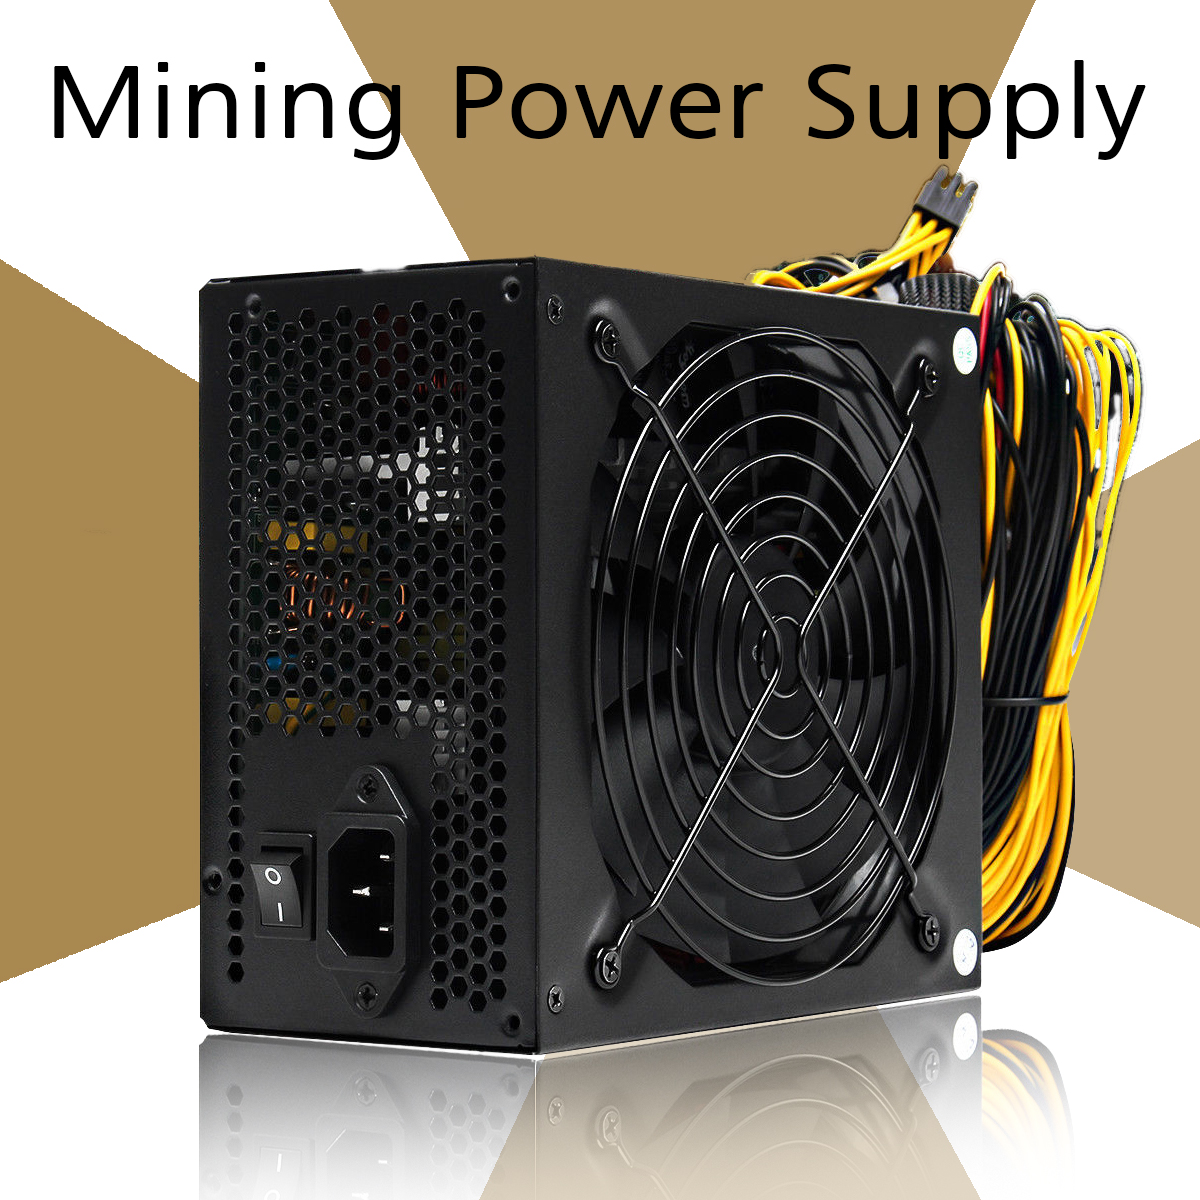 Professional-1800W-Mining-ATX-Power-Supply-Miner-Mining-Machine-SATA-IDE-For-6-GPU-ETH-BTC-Ethereum-1253762